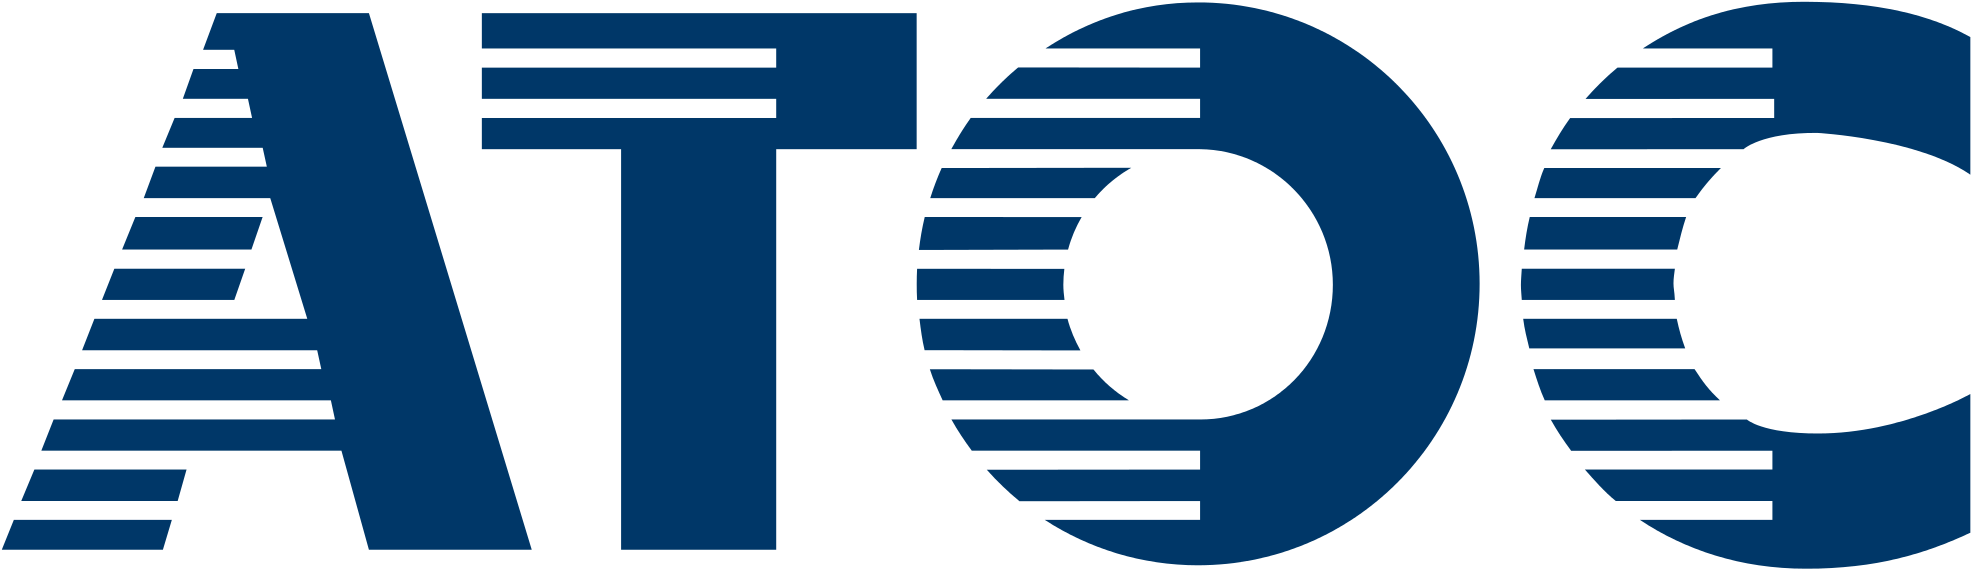 Open - Train Companies Logos (2000x593)